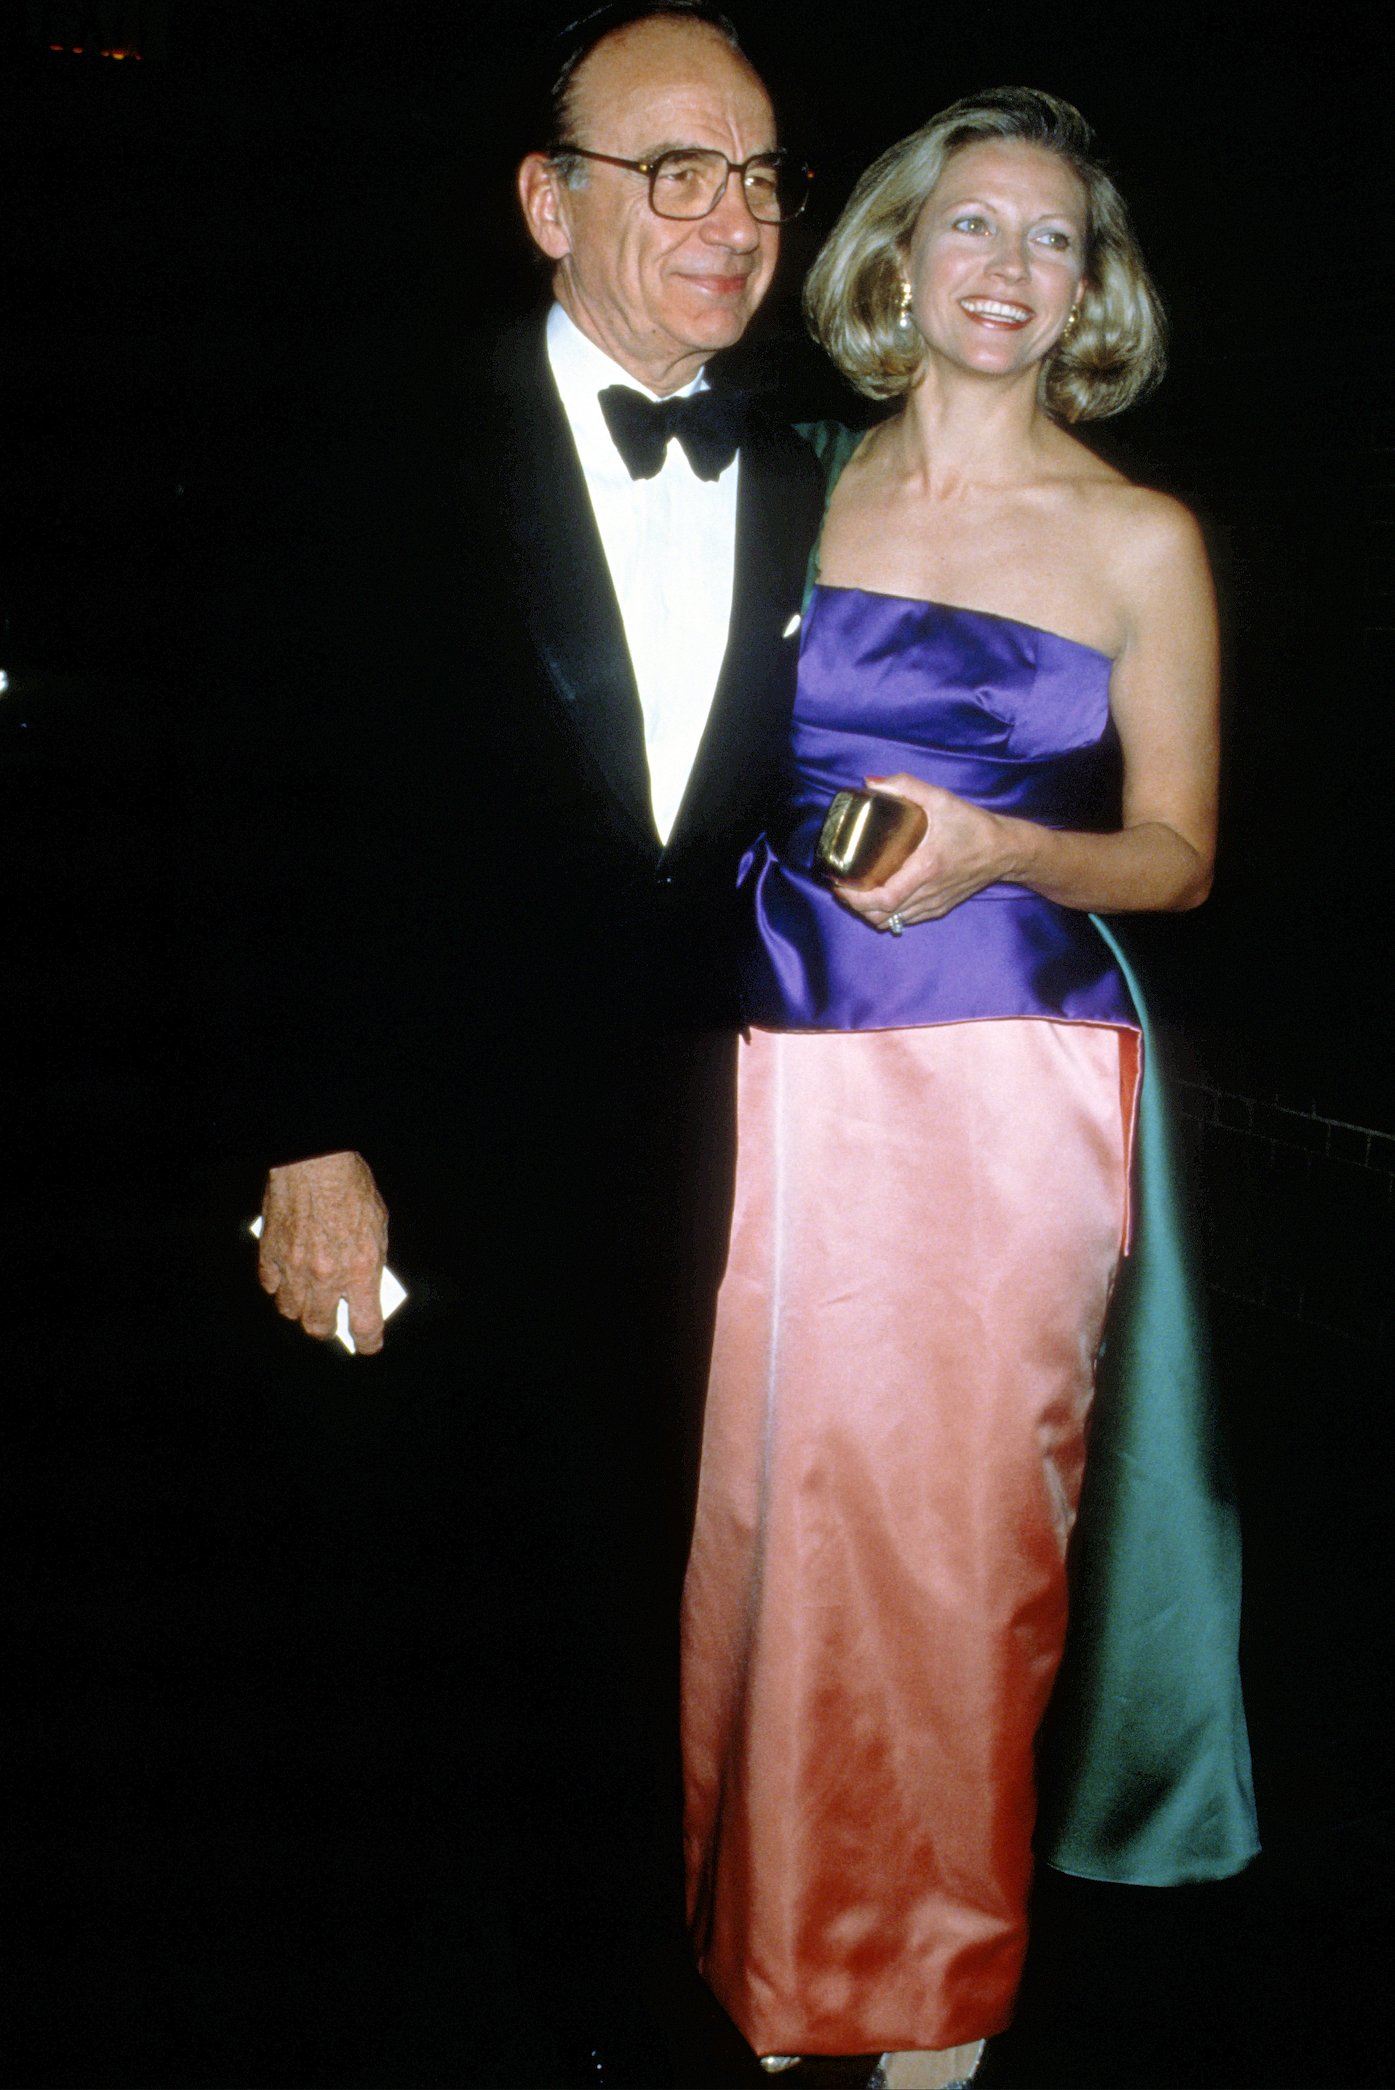 Rupert Murdoch and wife Anna Murdoch Mann circa 1989 standing with their arms around each other in formal attire